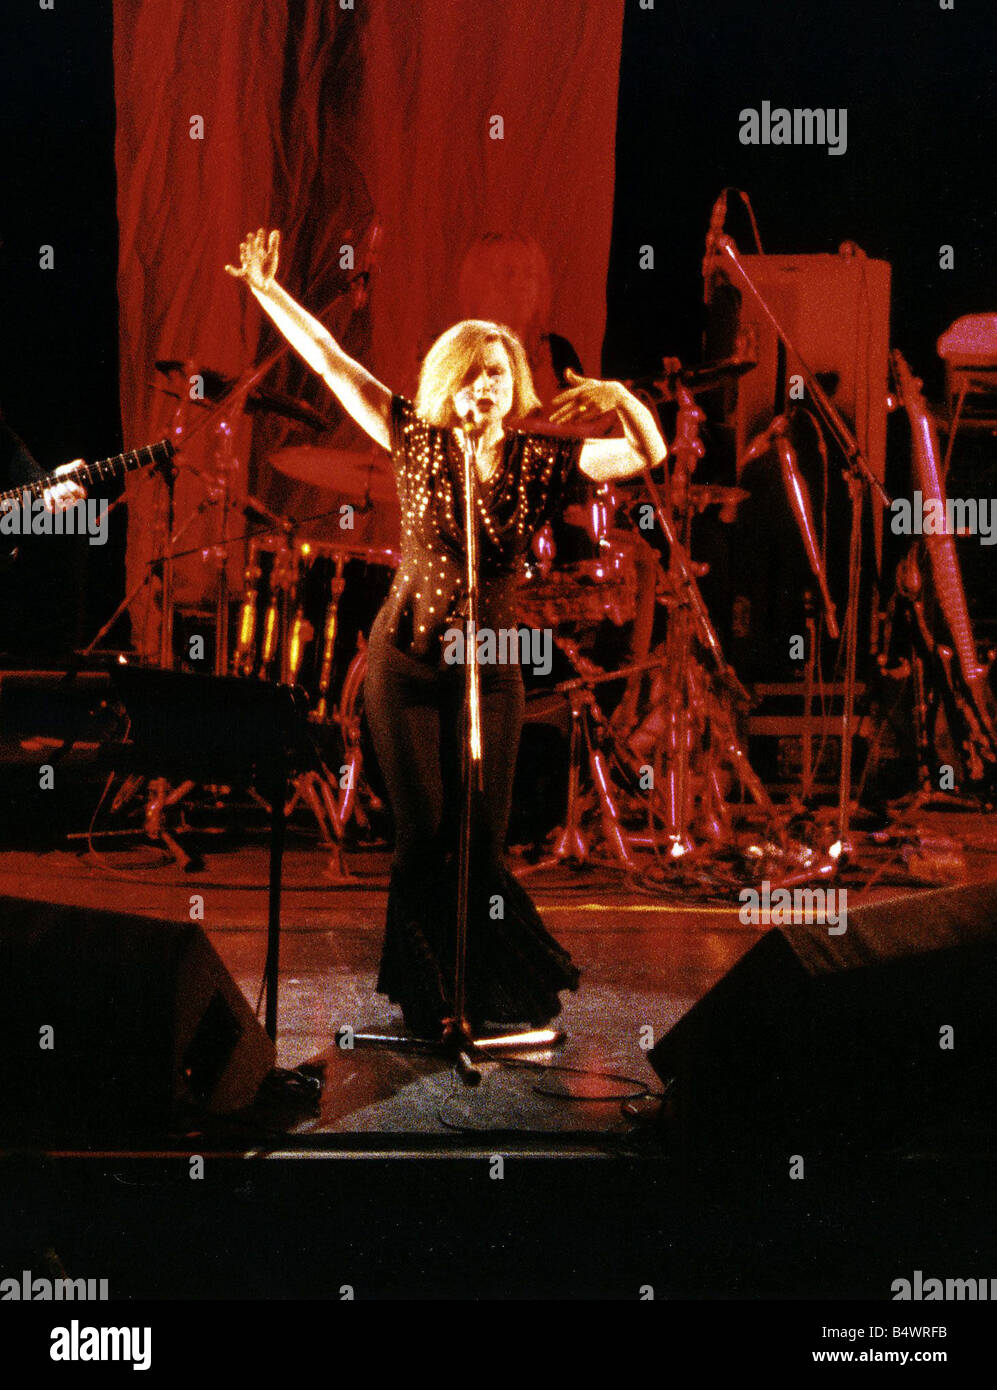 Debbie Harry chanteur et leader du groupe pop Blondie performing on stage Banque D'Images